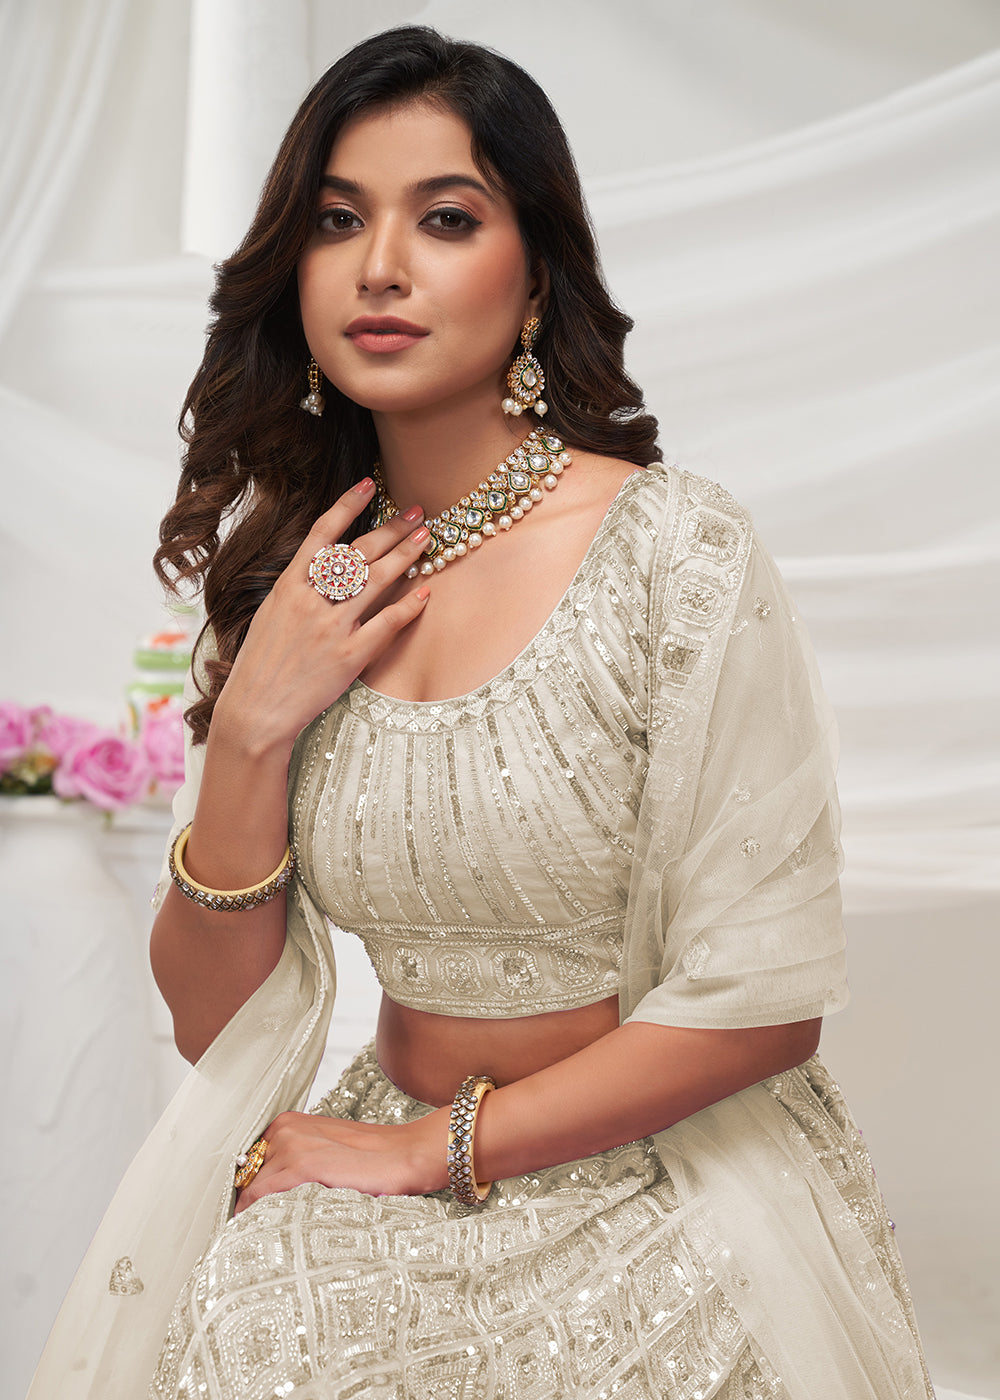 Buy Now Pearled Ivory White Heavy Embroidered Bridal Lehenga Choli Online in USA, UK, Canada & Worldwide at Empress Clothing. 